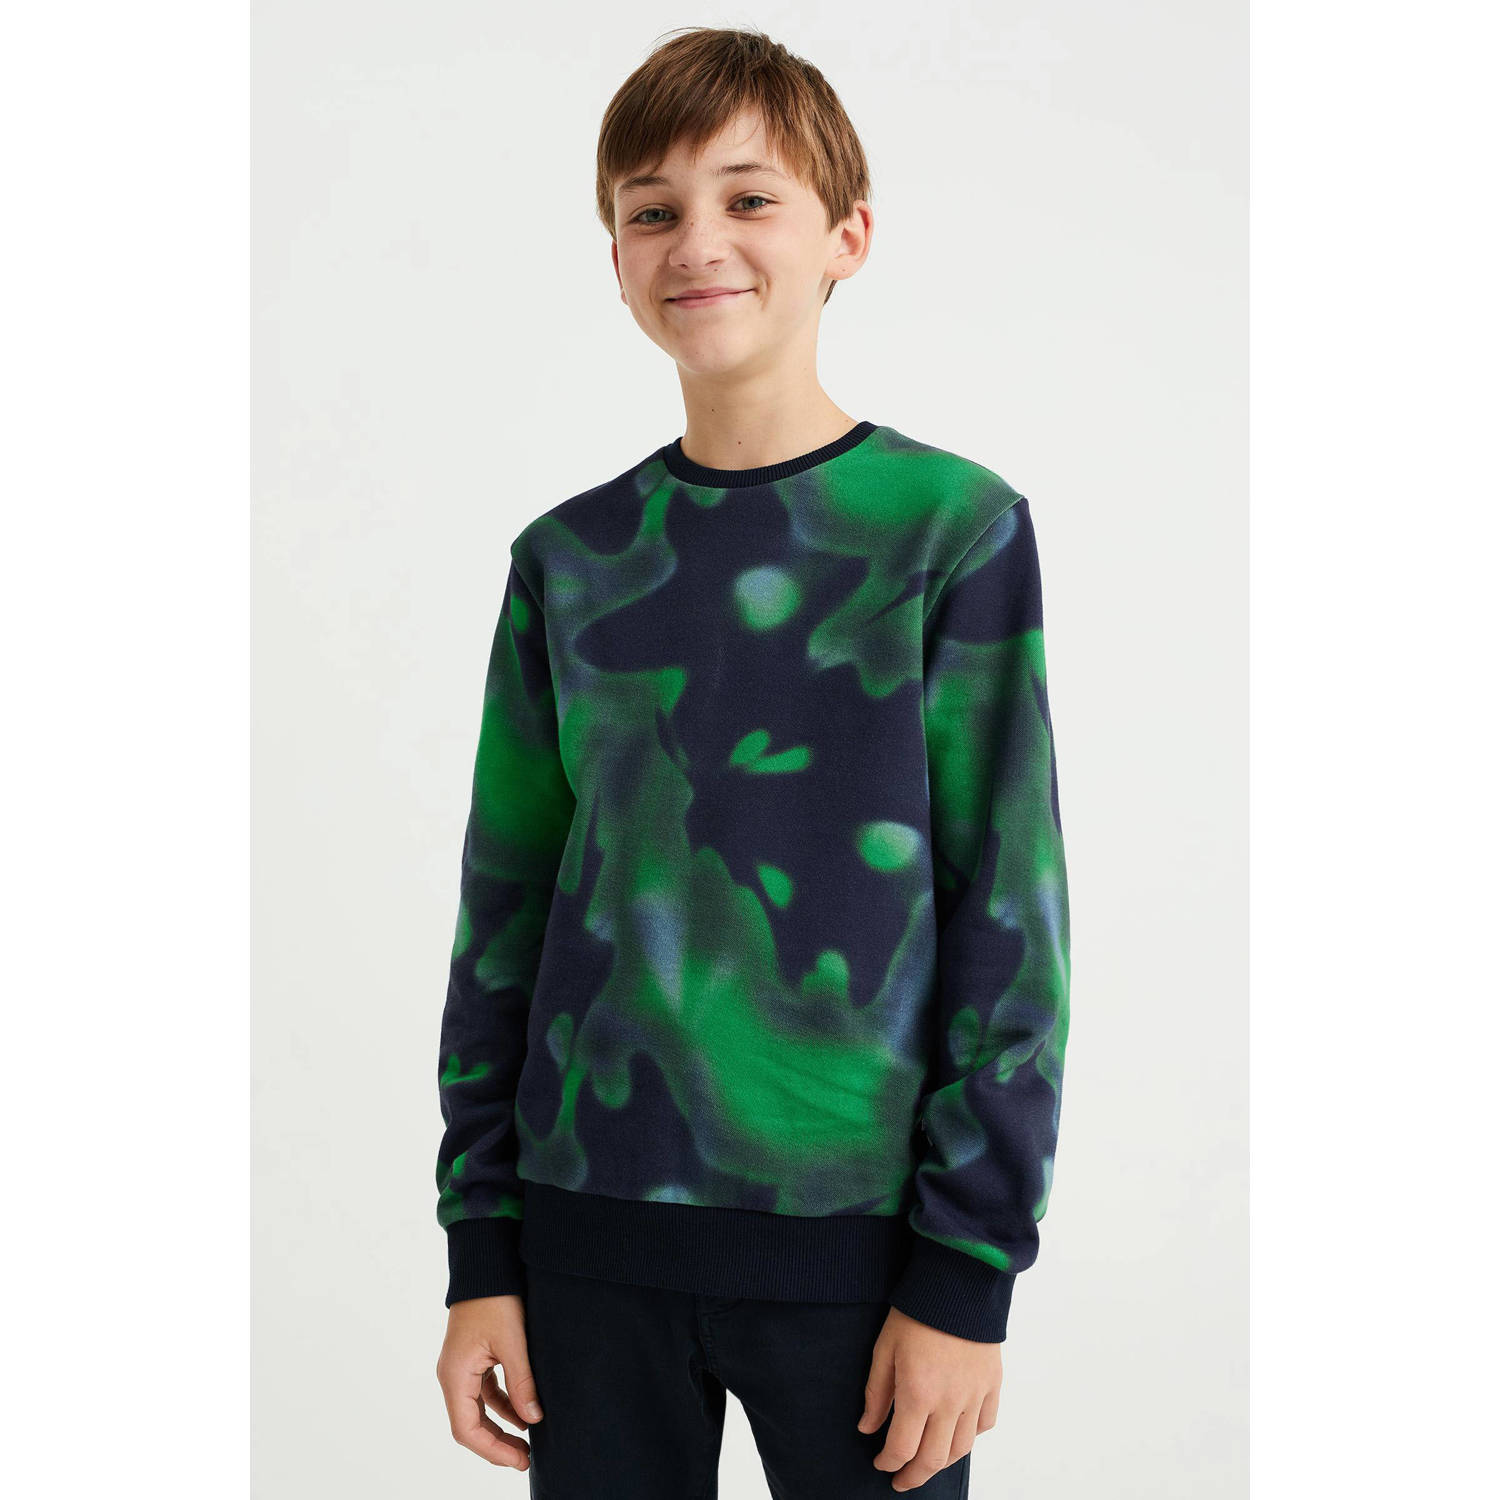 WE Fashion sweater met all over print zwart groen